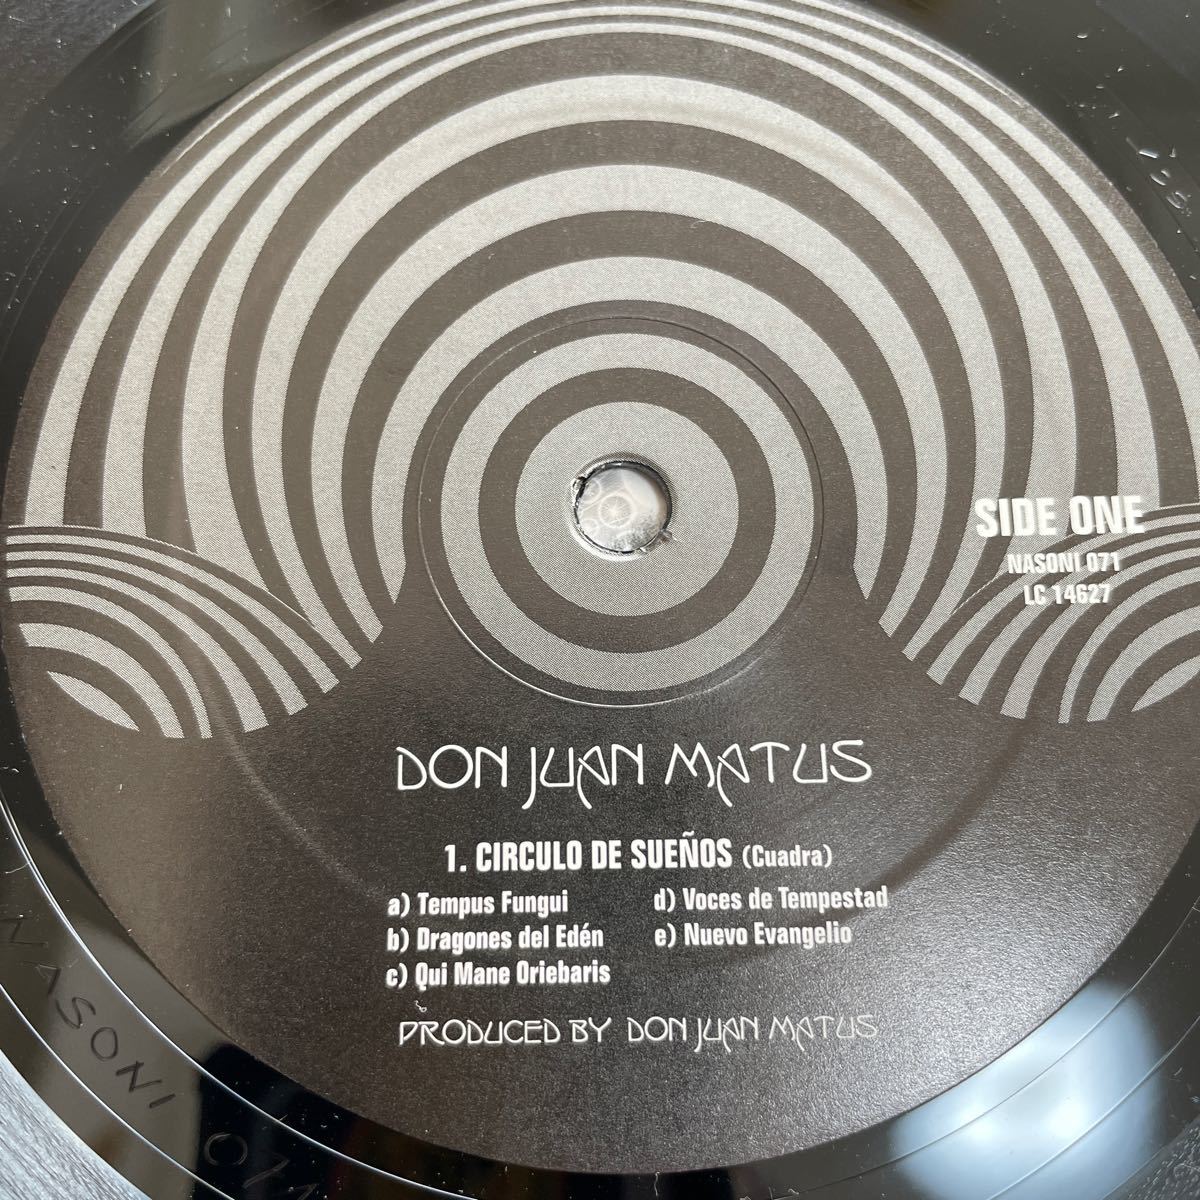 DON JUAN MATUS - LP ストーナーロック サイケ psych acid stoner rock psychedelic_画像3